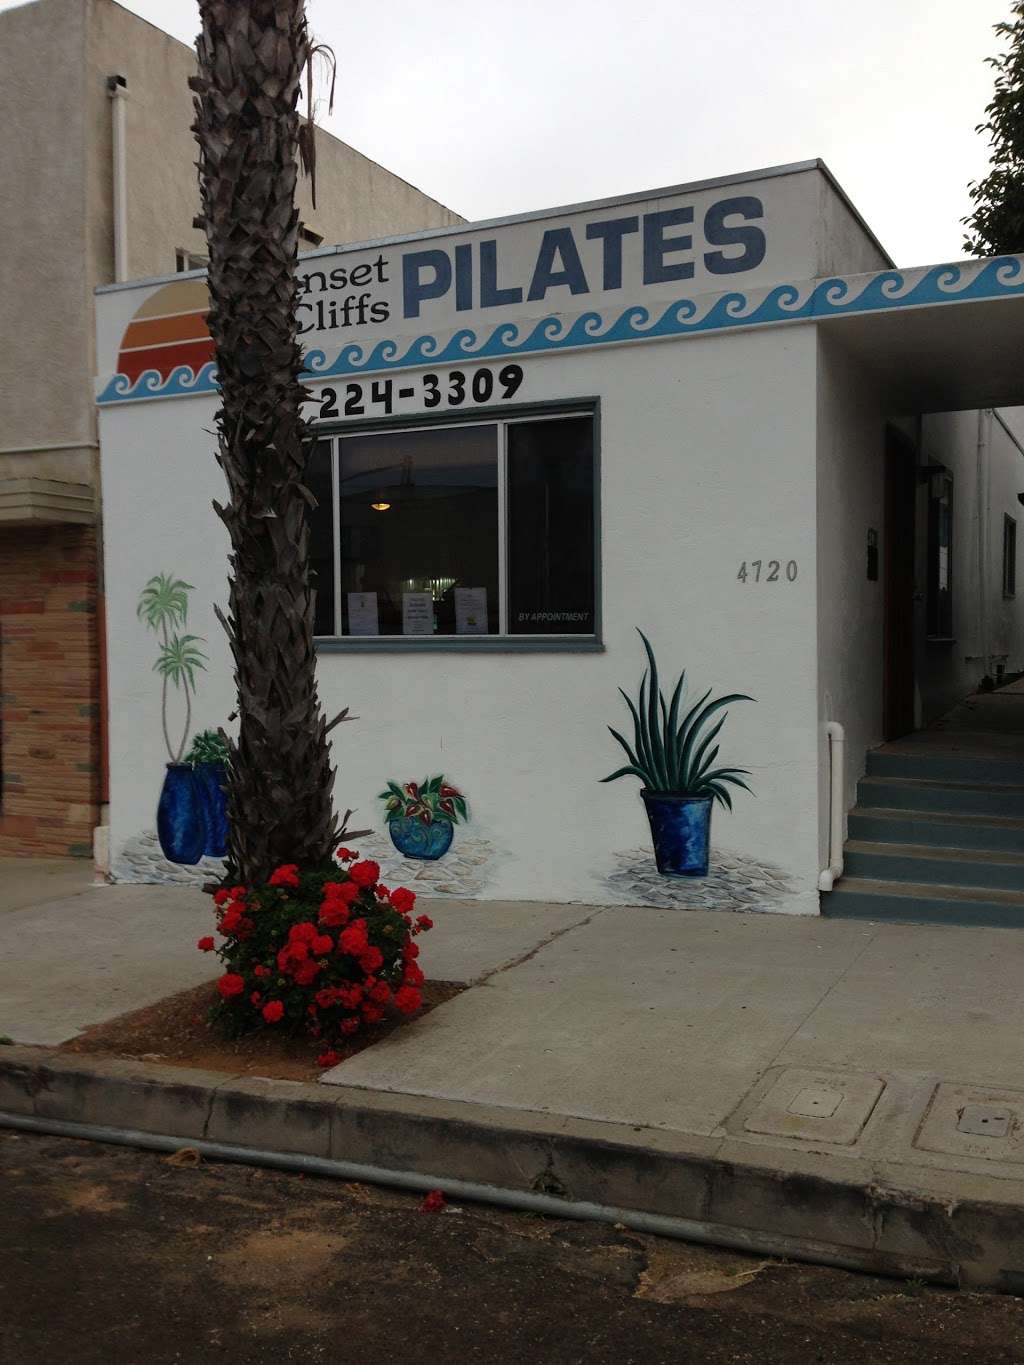 Sunset Cliffs Pilates | 4720 Point Loma Ave, San Diego, CA 92107 | Phone: (619) 224-3309